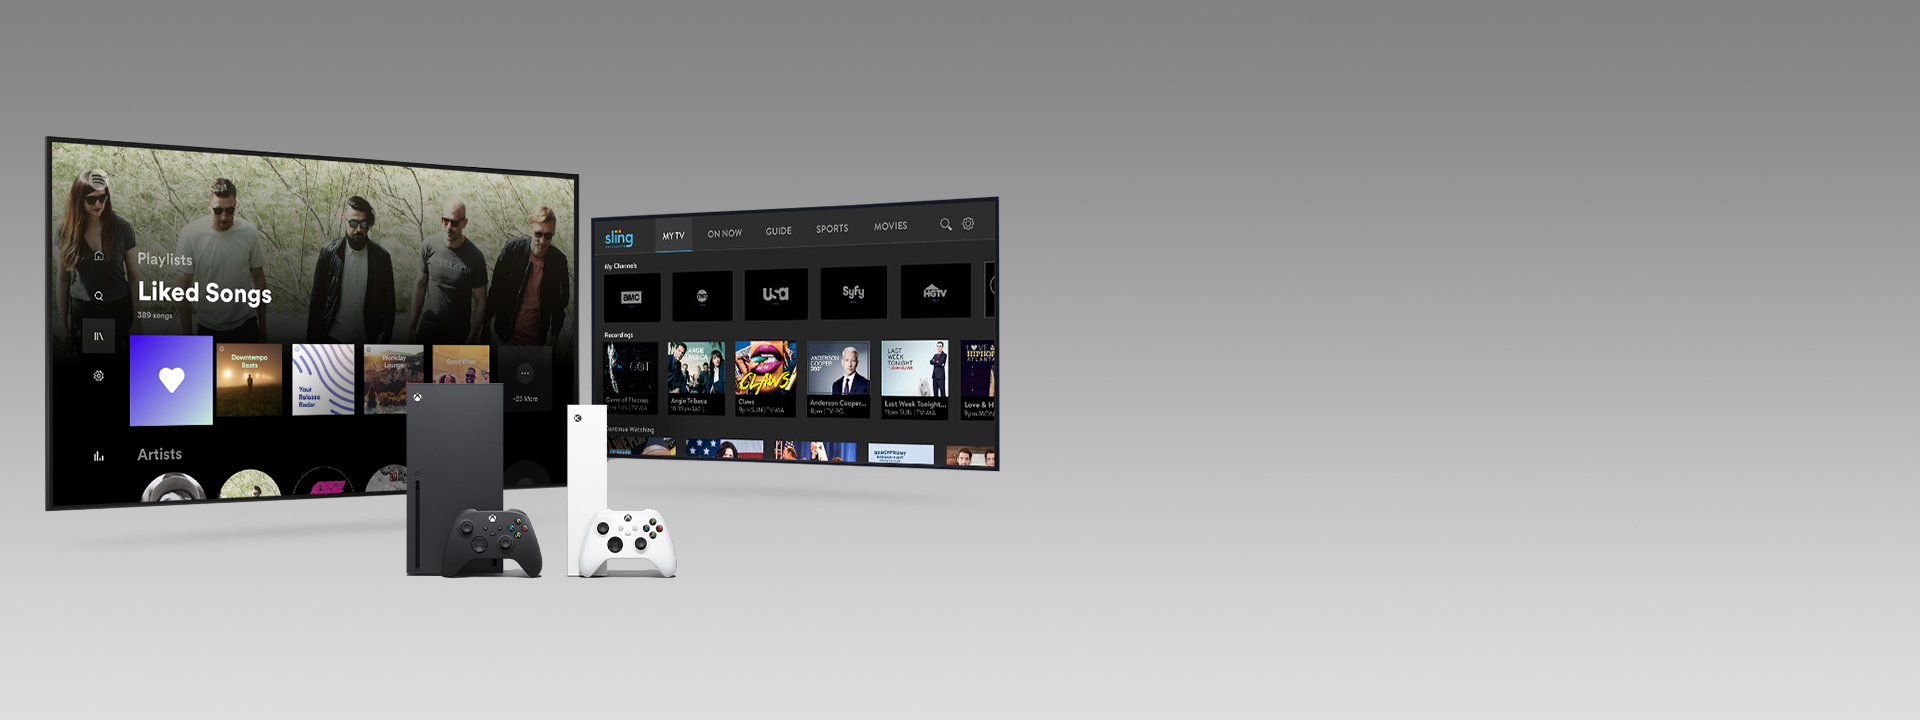 Xbox Series X 和 Series S 與控制器，後方是兩台顯示應用程式使用者介面的電視螢幕。